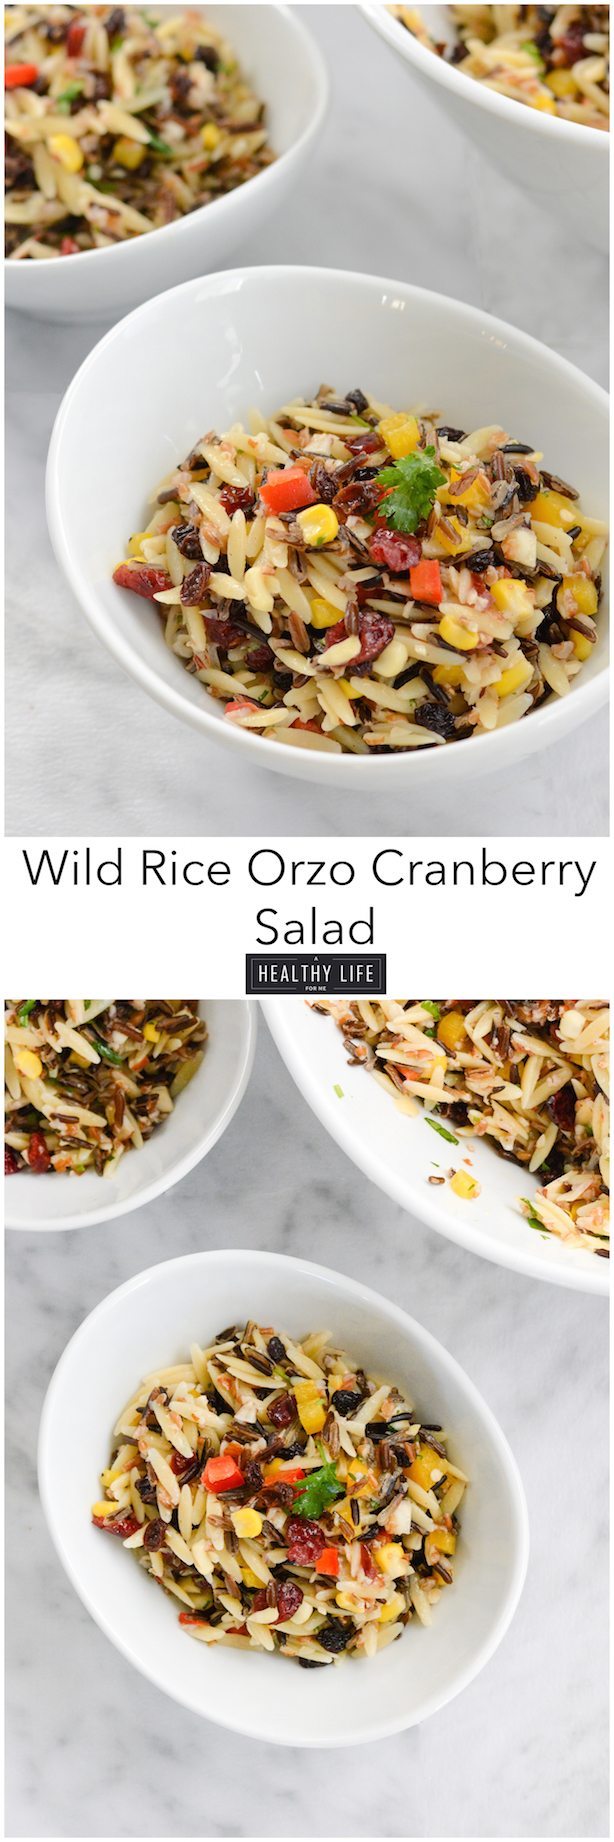 Wild Rice Orzo Cranberry Salad Recipe | ahealthylifeforme.com